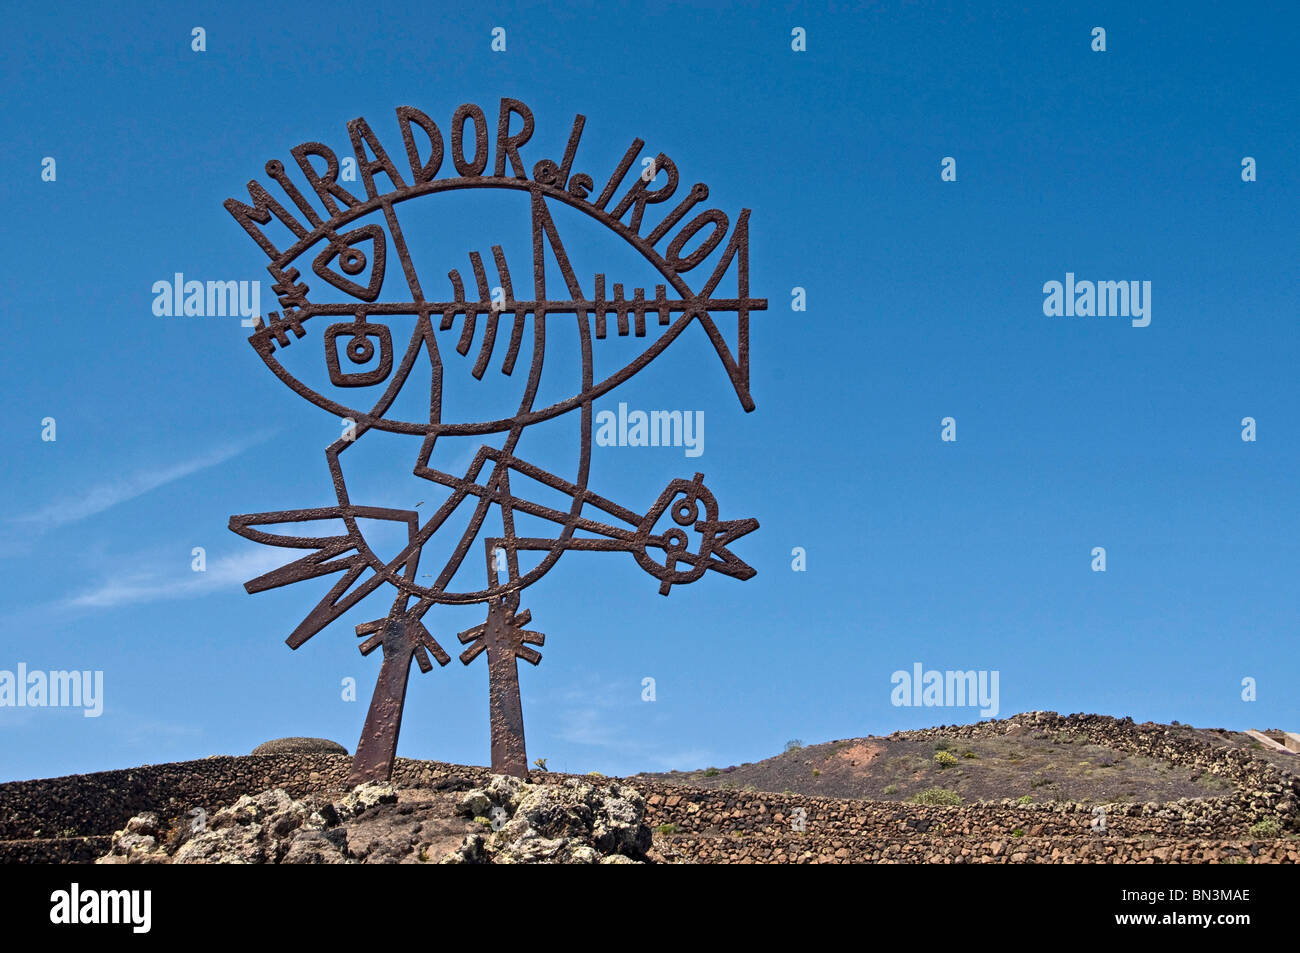 Work of art at Mirador del Rio, Lanzarote, Spain, low angle view Stock Photo